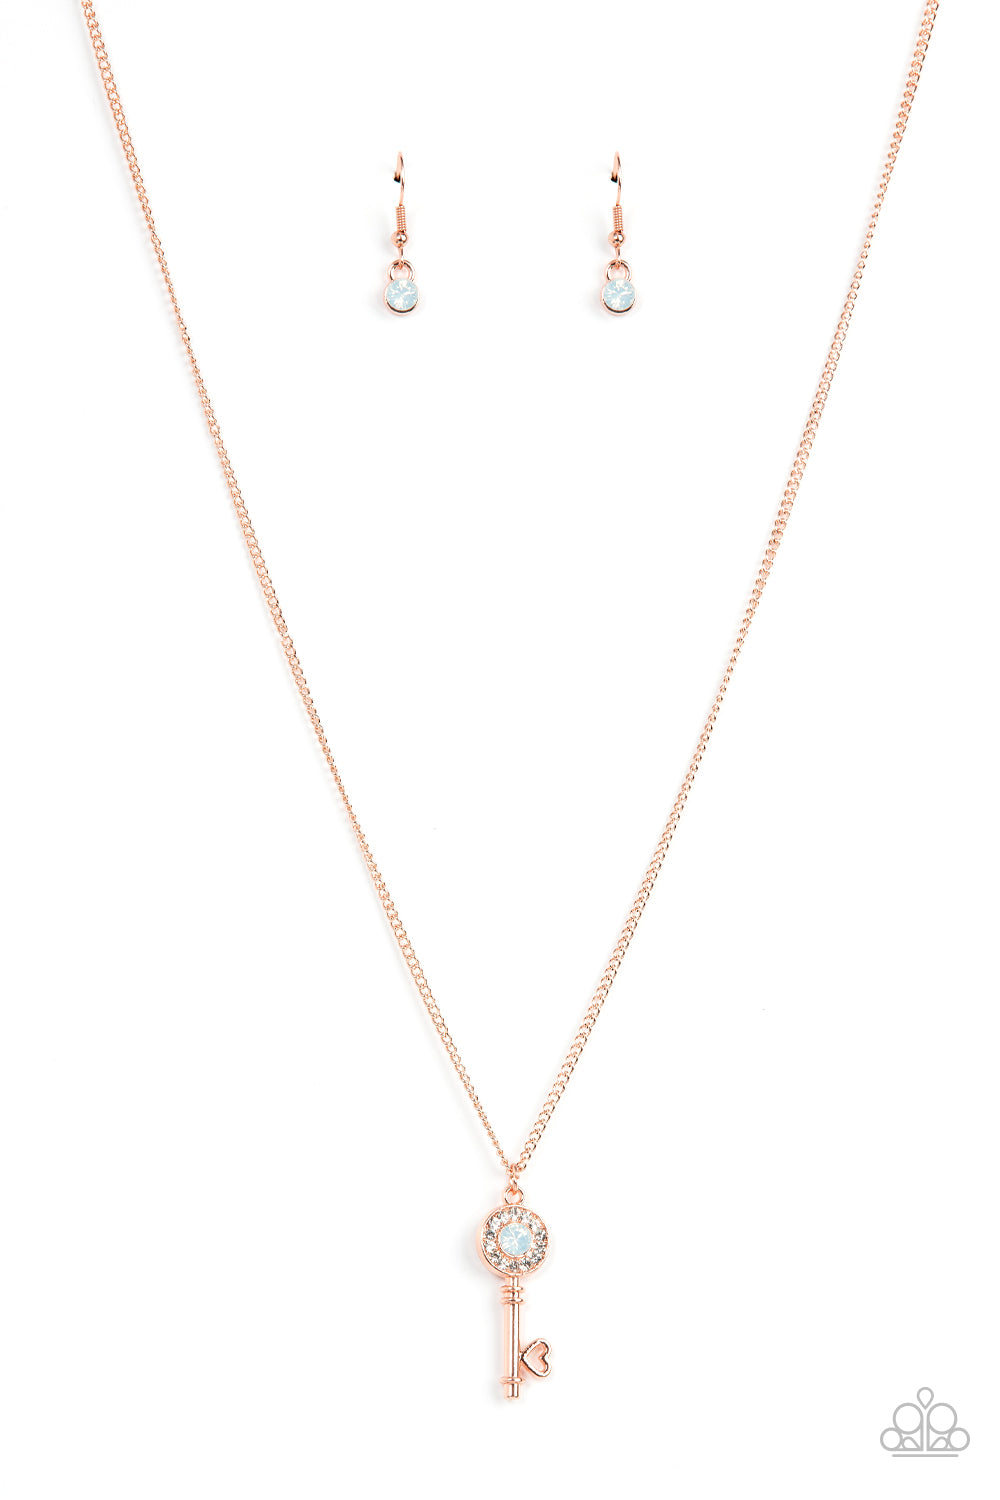 Prized Key Player - Copper necklace A062